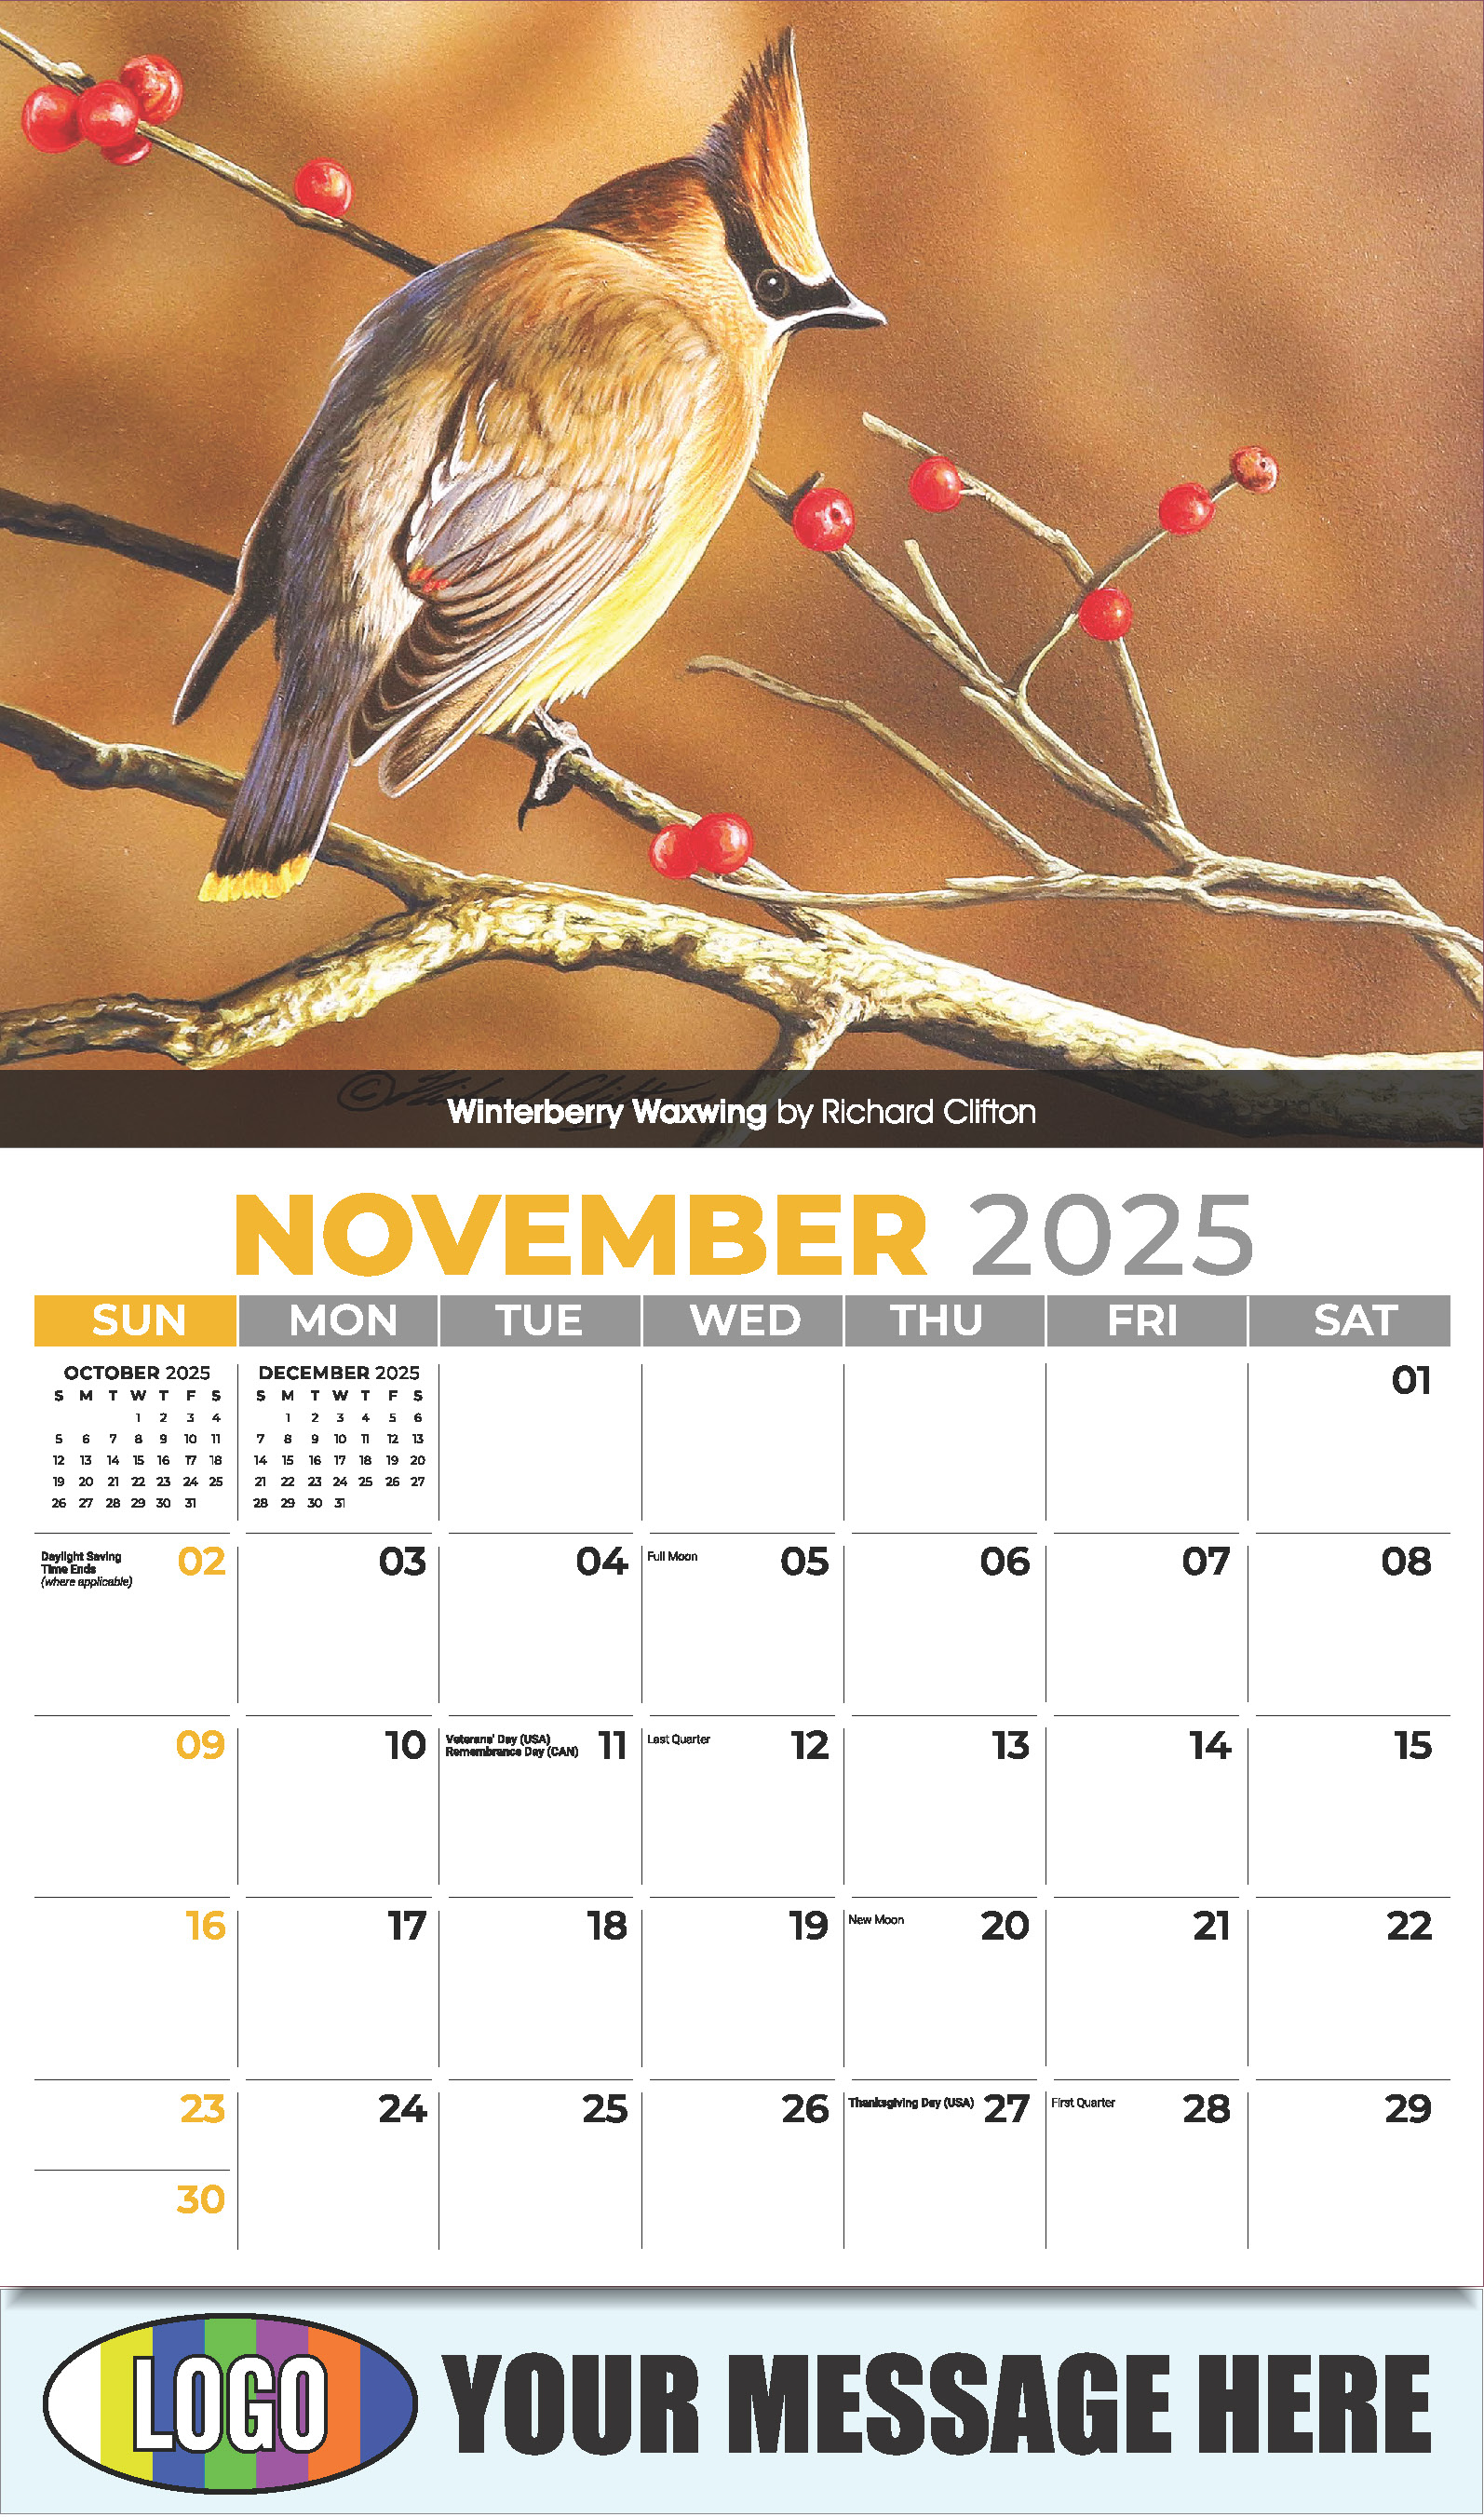 Garden Birds 2025 Business Promotional Calendar - November